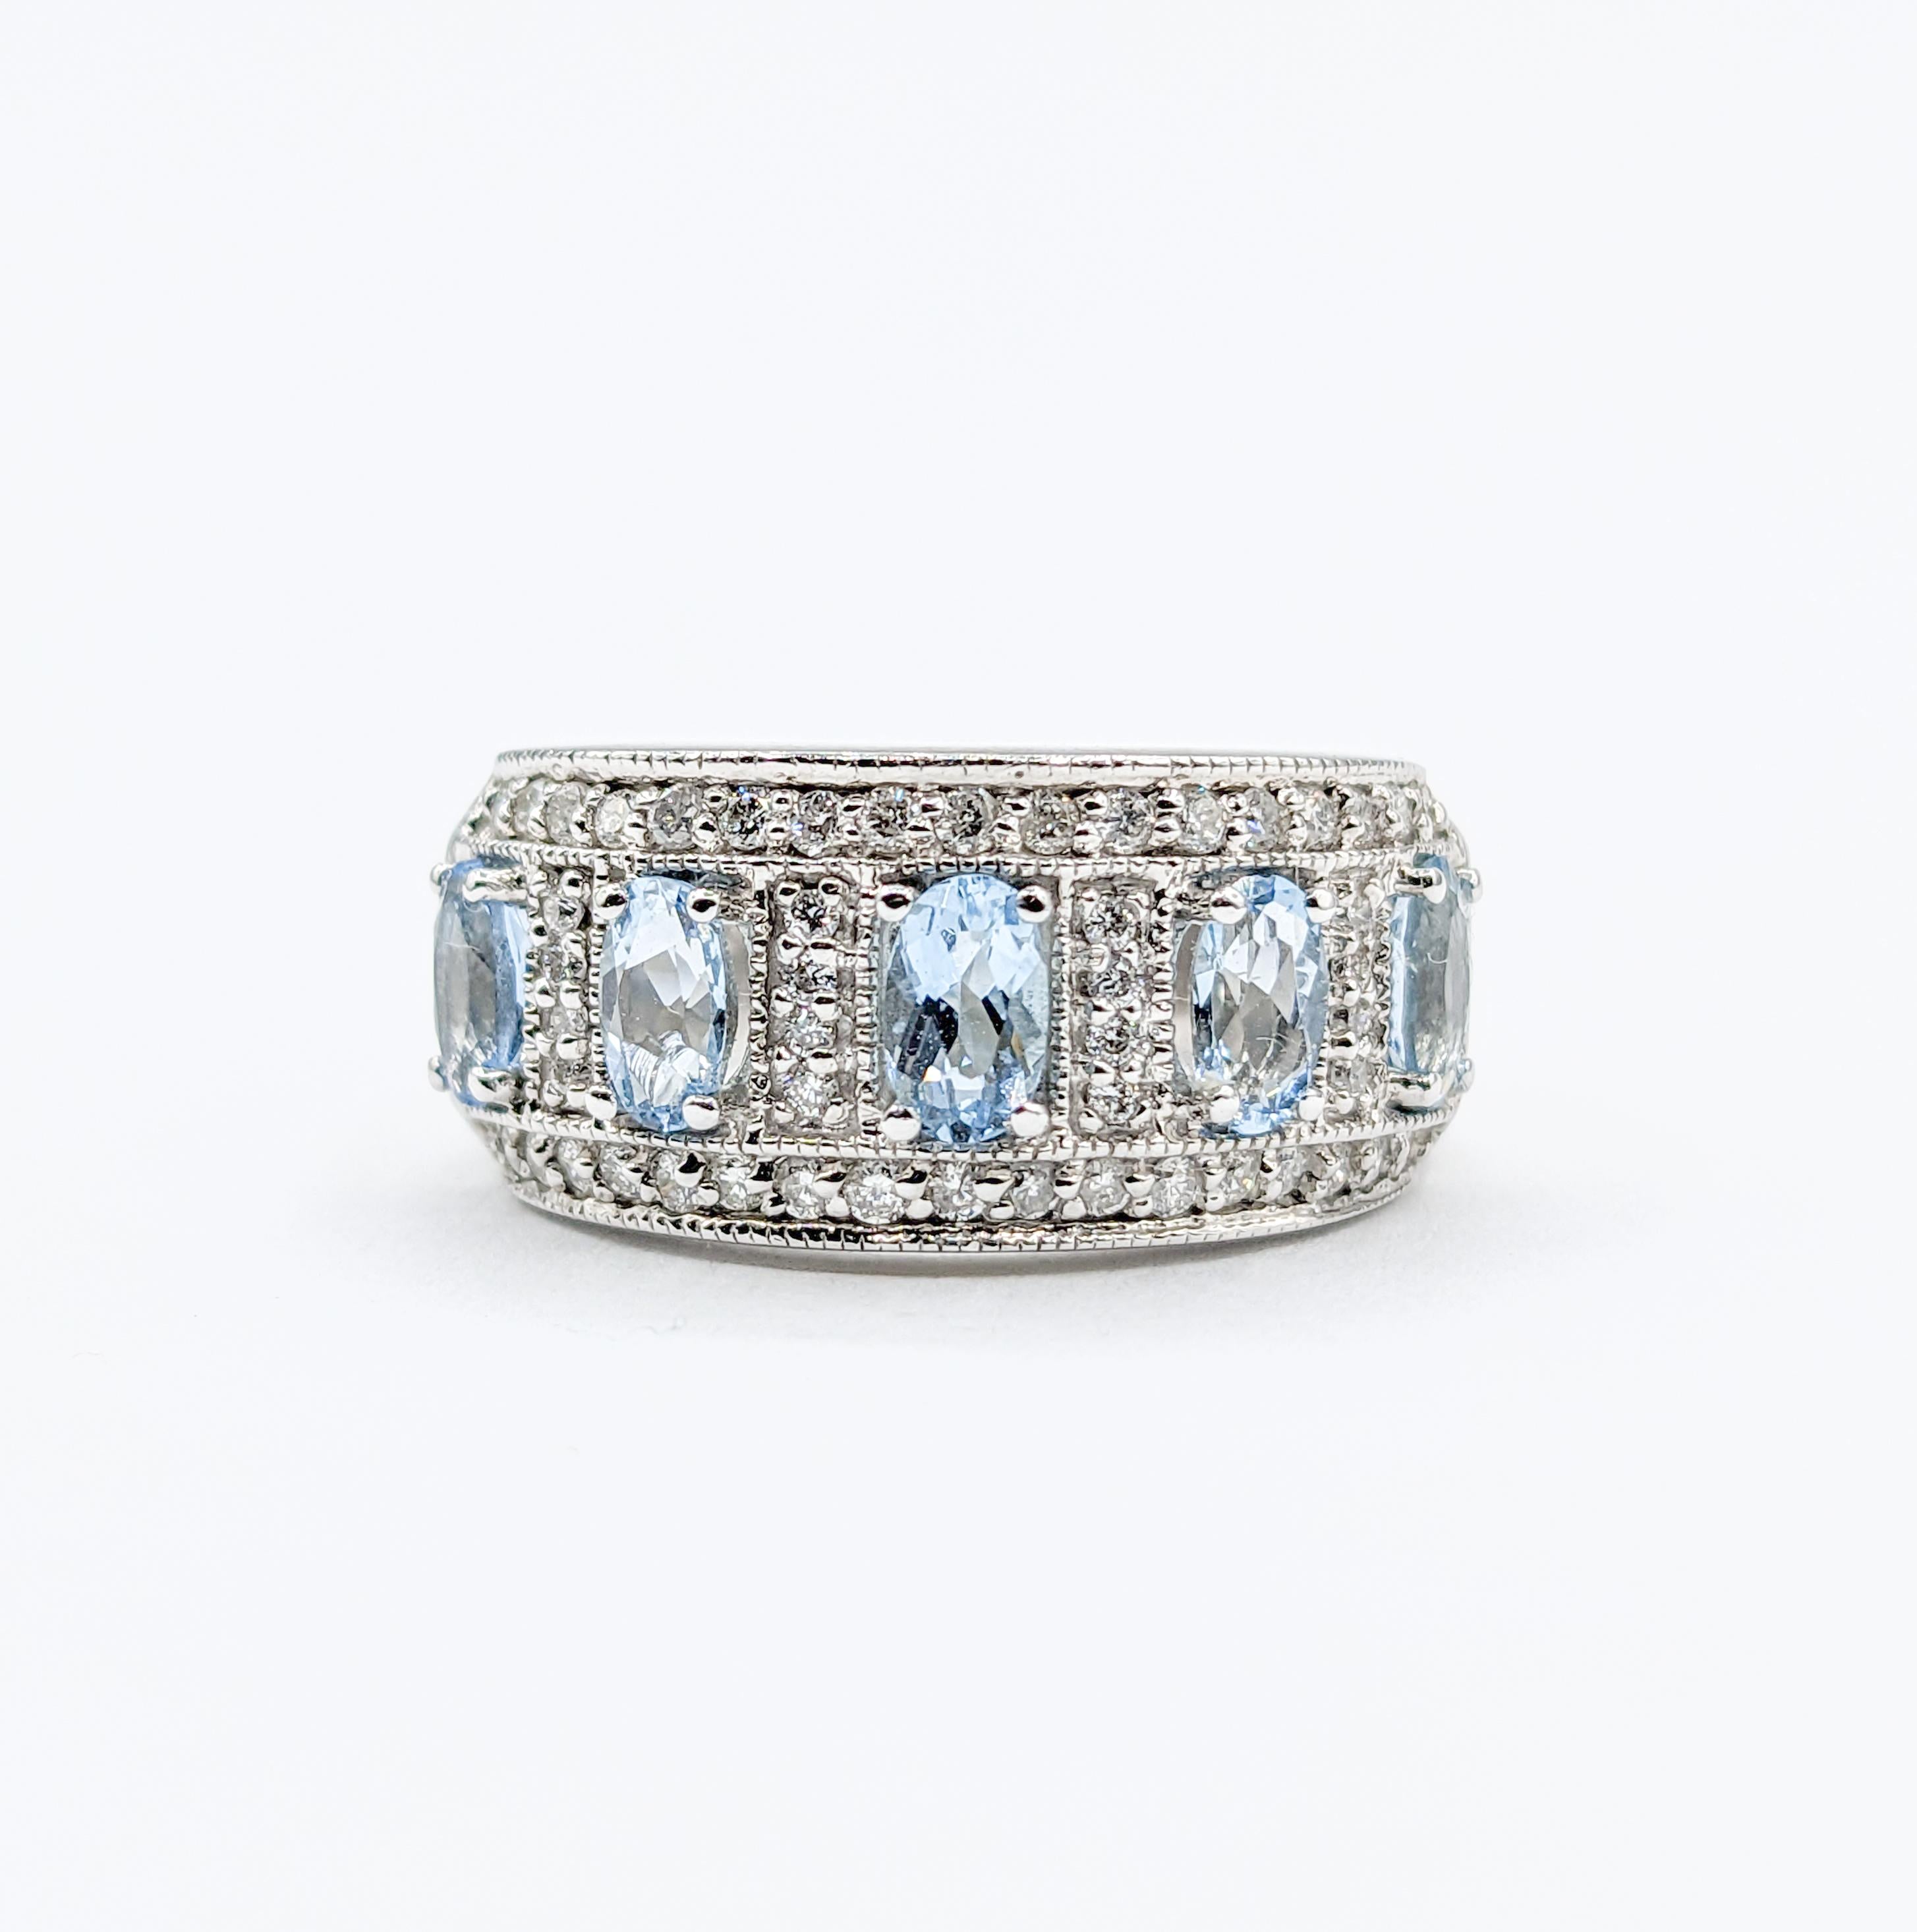  Fabulous Aquamarine & Diamond Wide Band Ring in White Gold 5